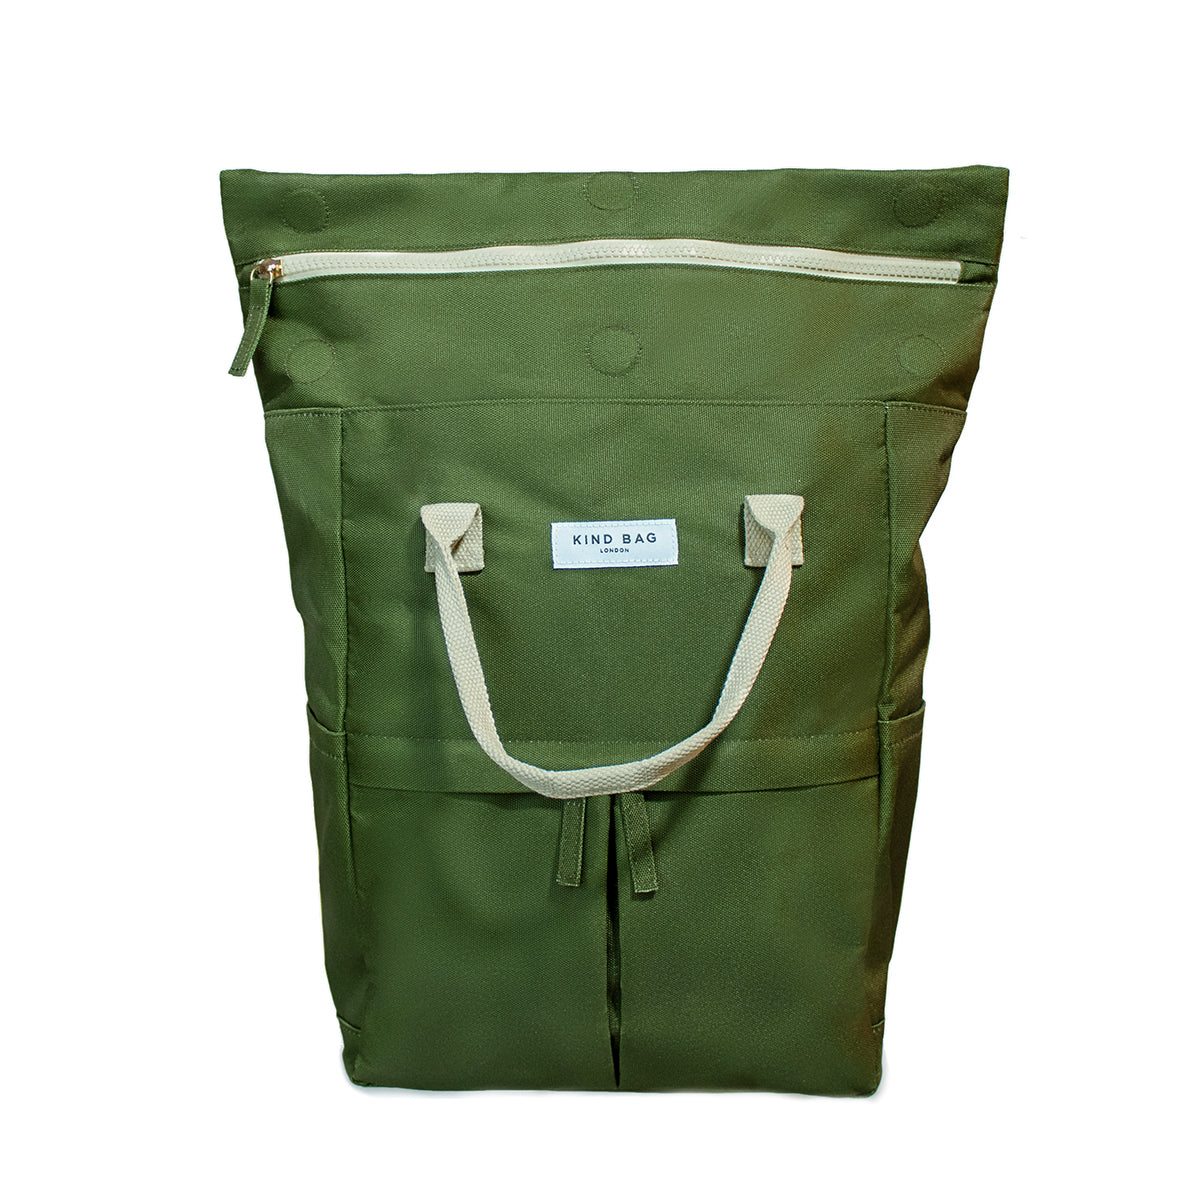 Backpack Medium Khaki